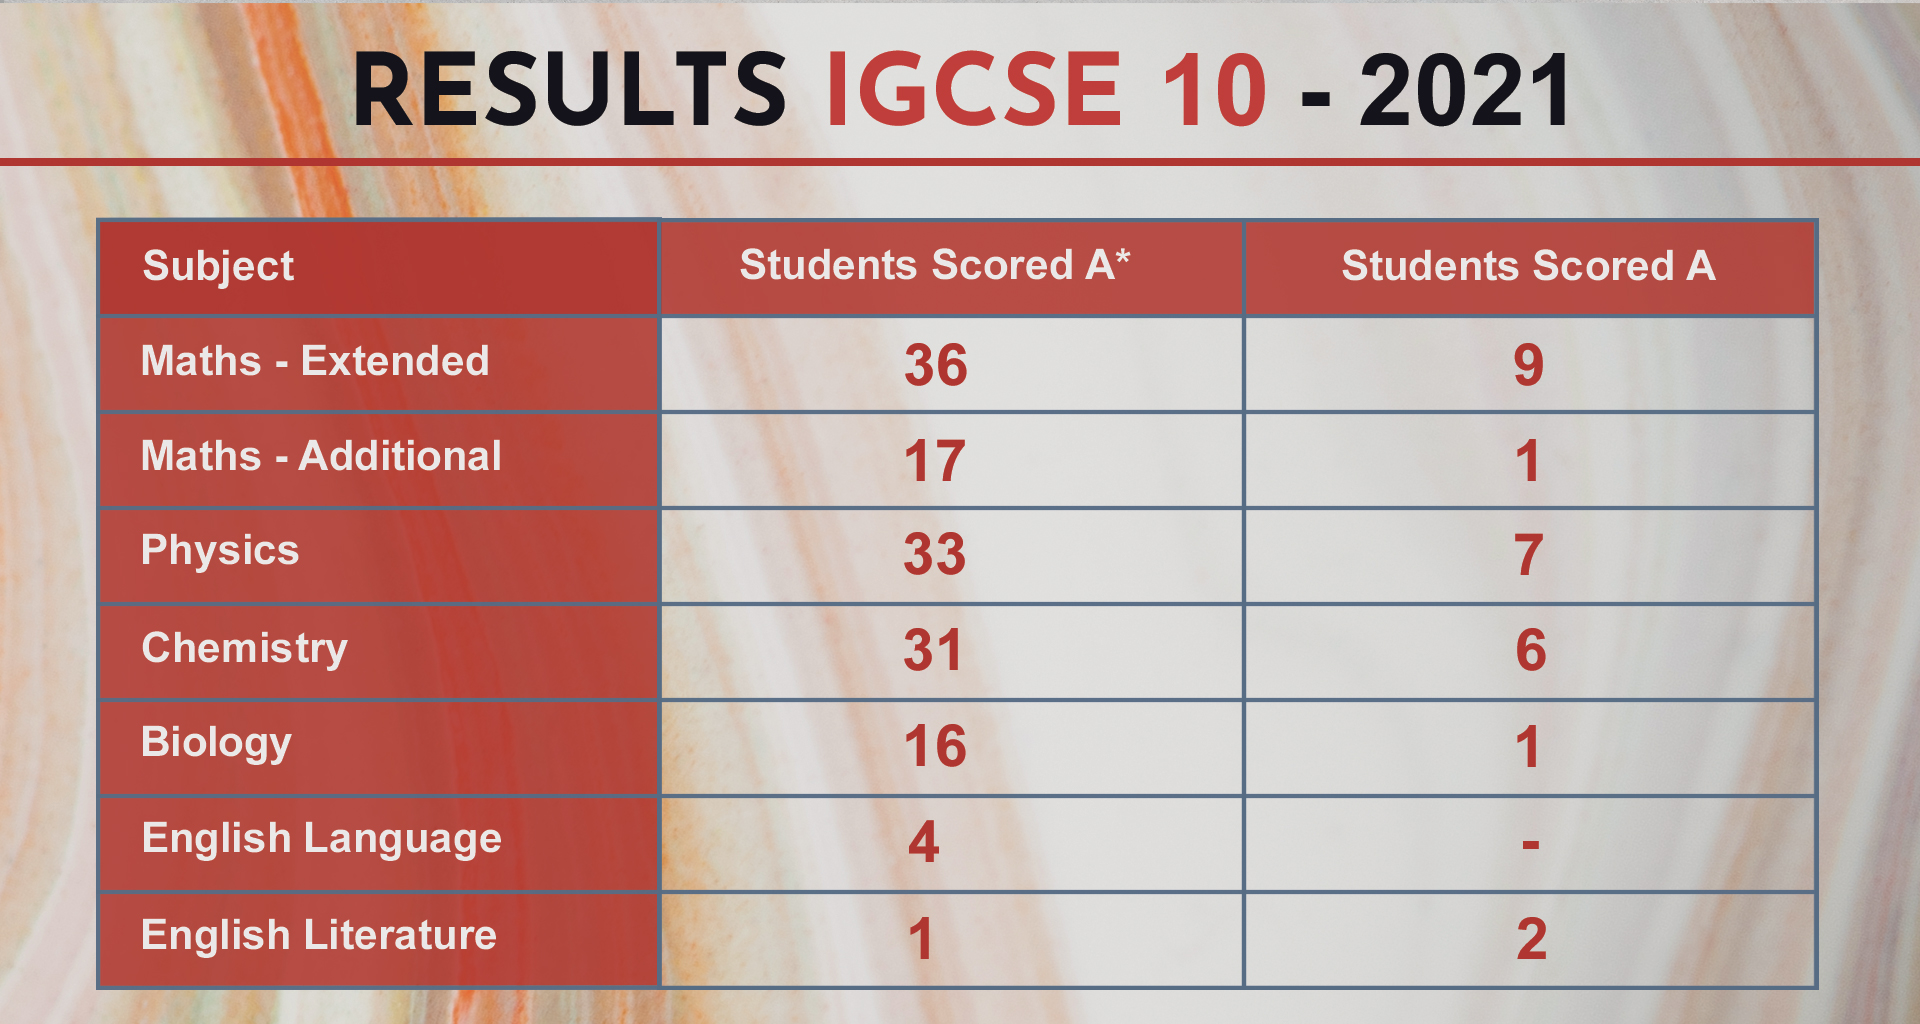 IGCSE 10 Results - 2021